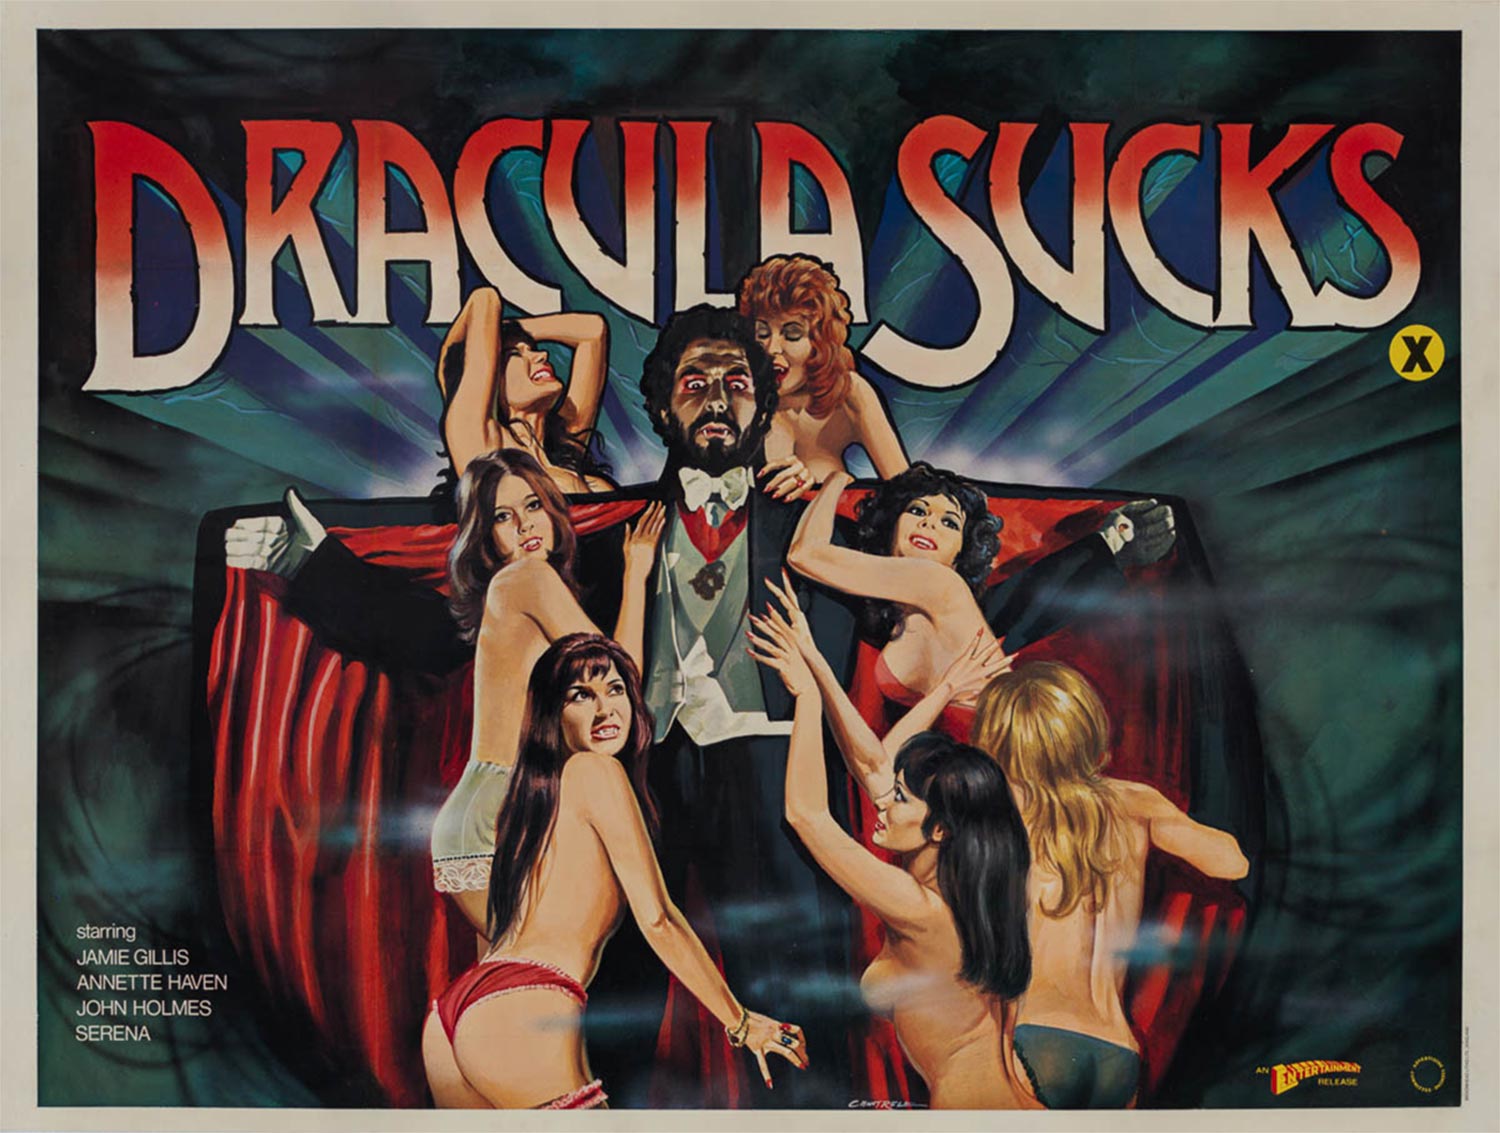 Dracula Sucks DVD Review from Vinegar Syndrome! - Severed Cinema